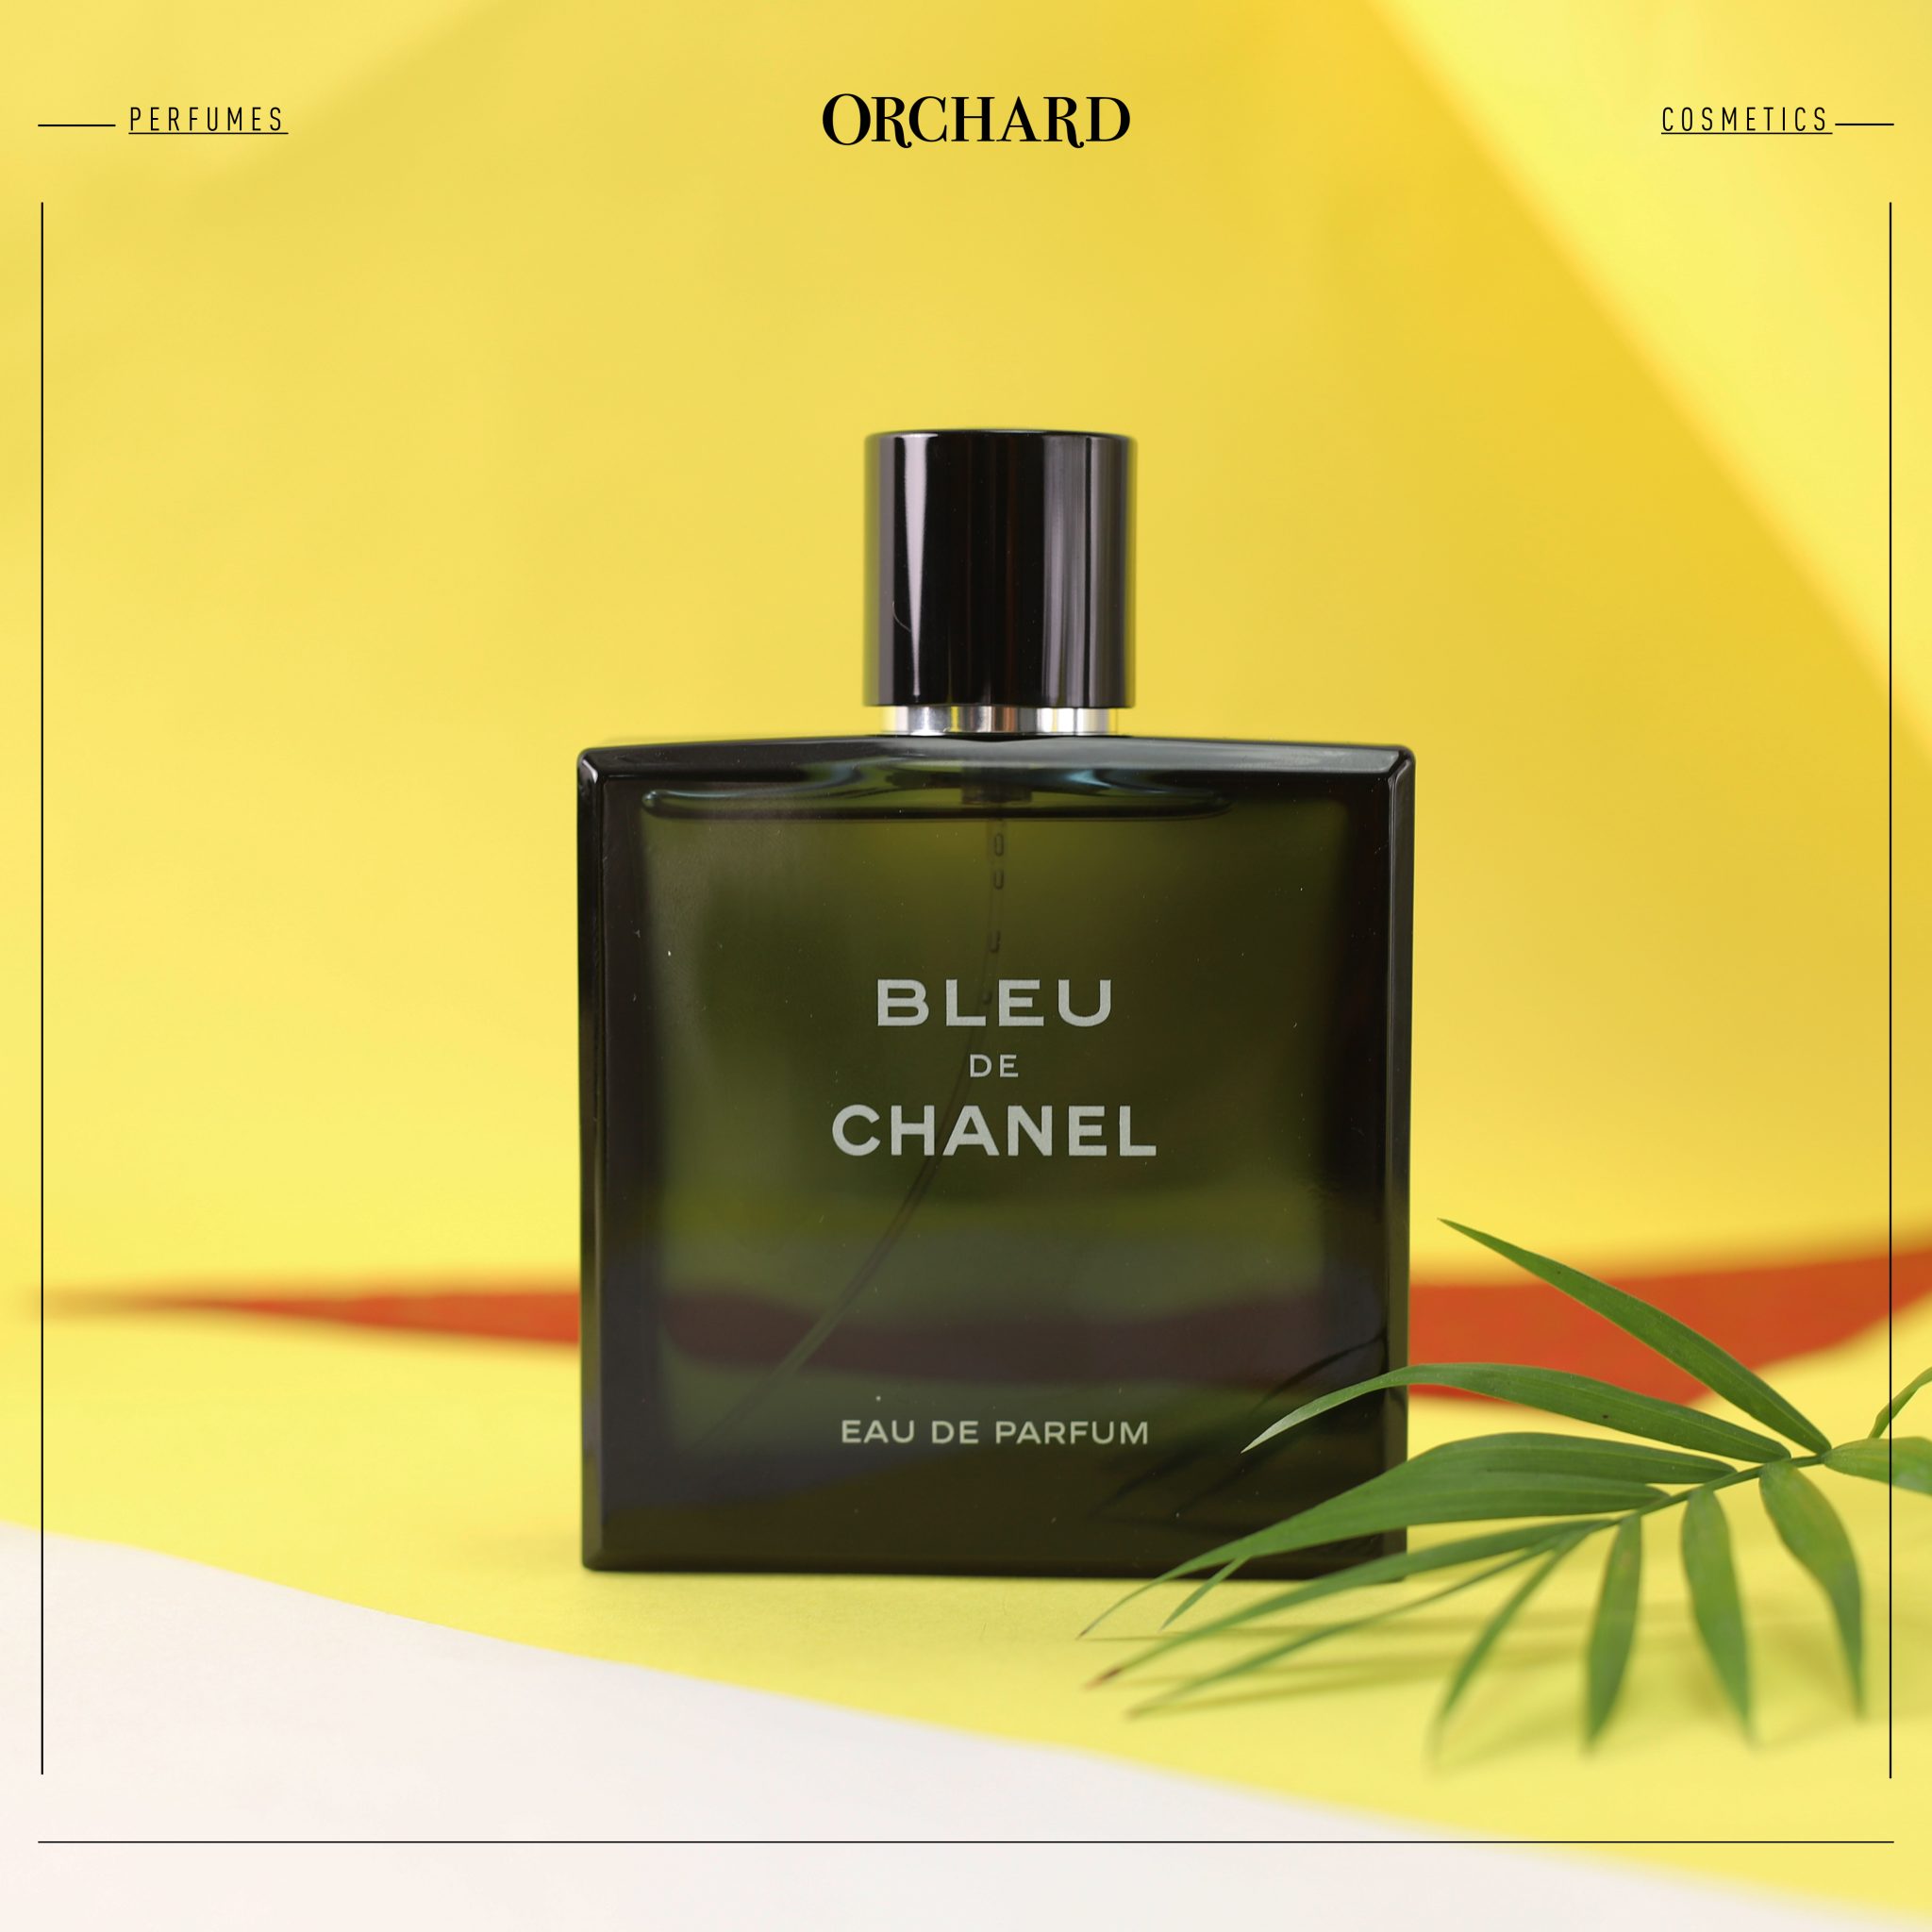 Nước Hoa Chanel Chance Eau Tendre Eau de Parfum 100ml